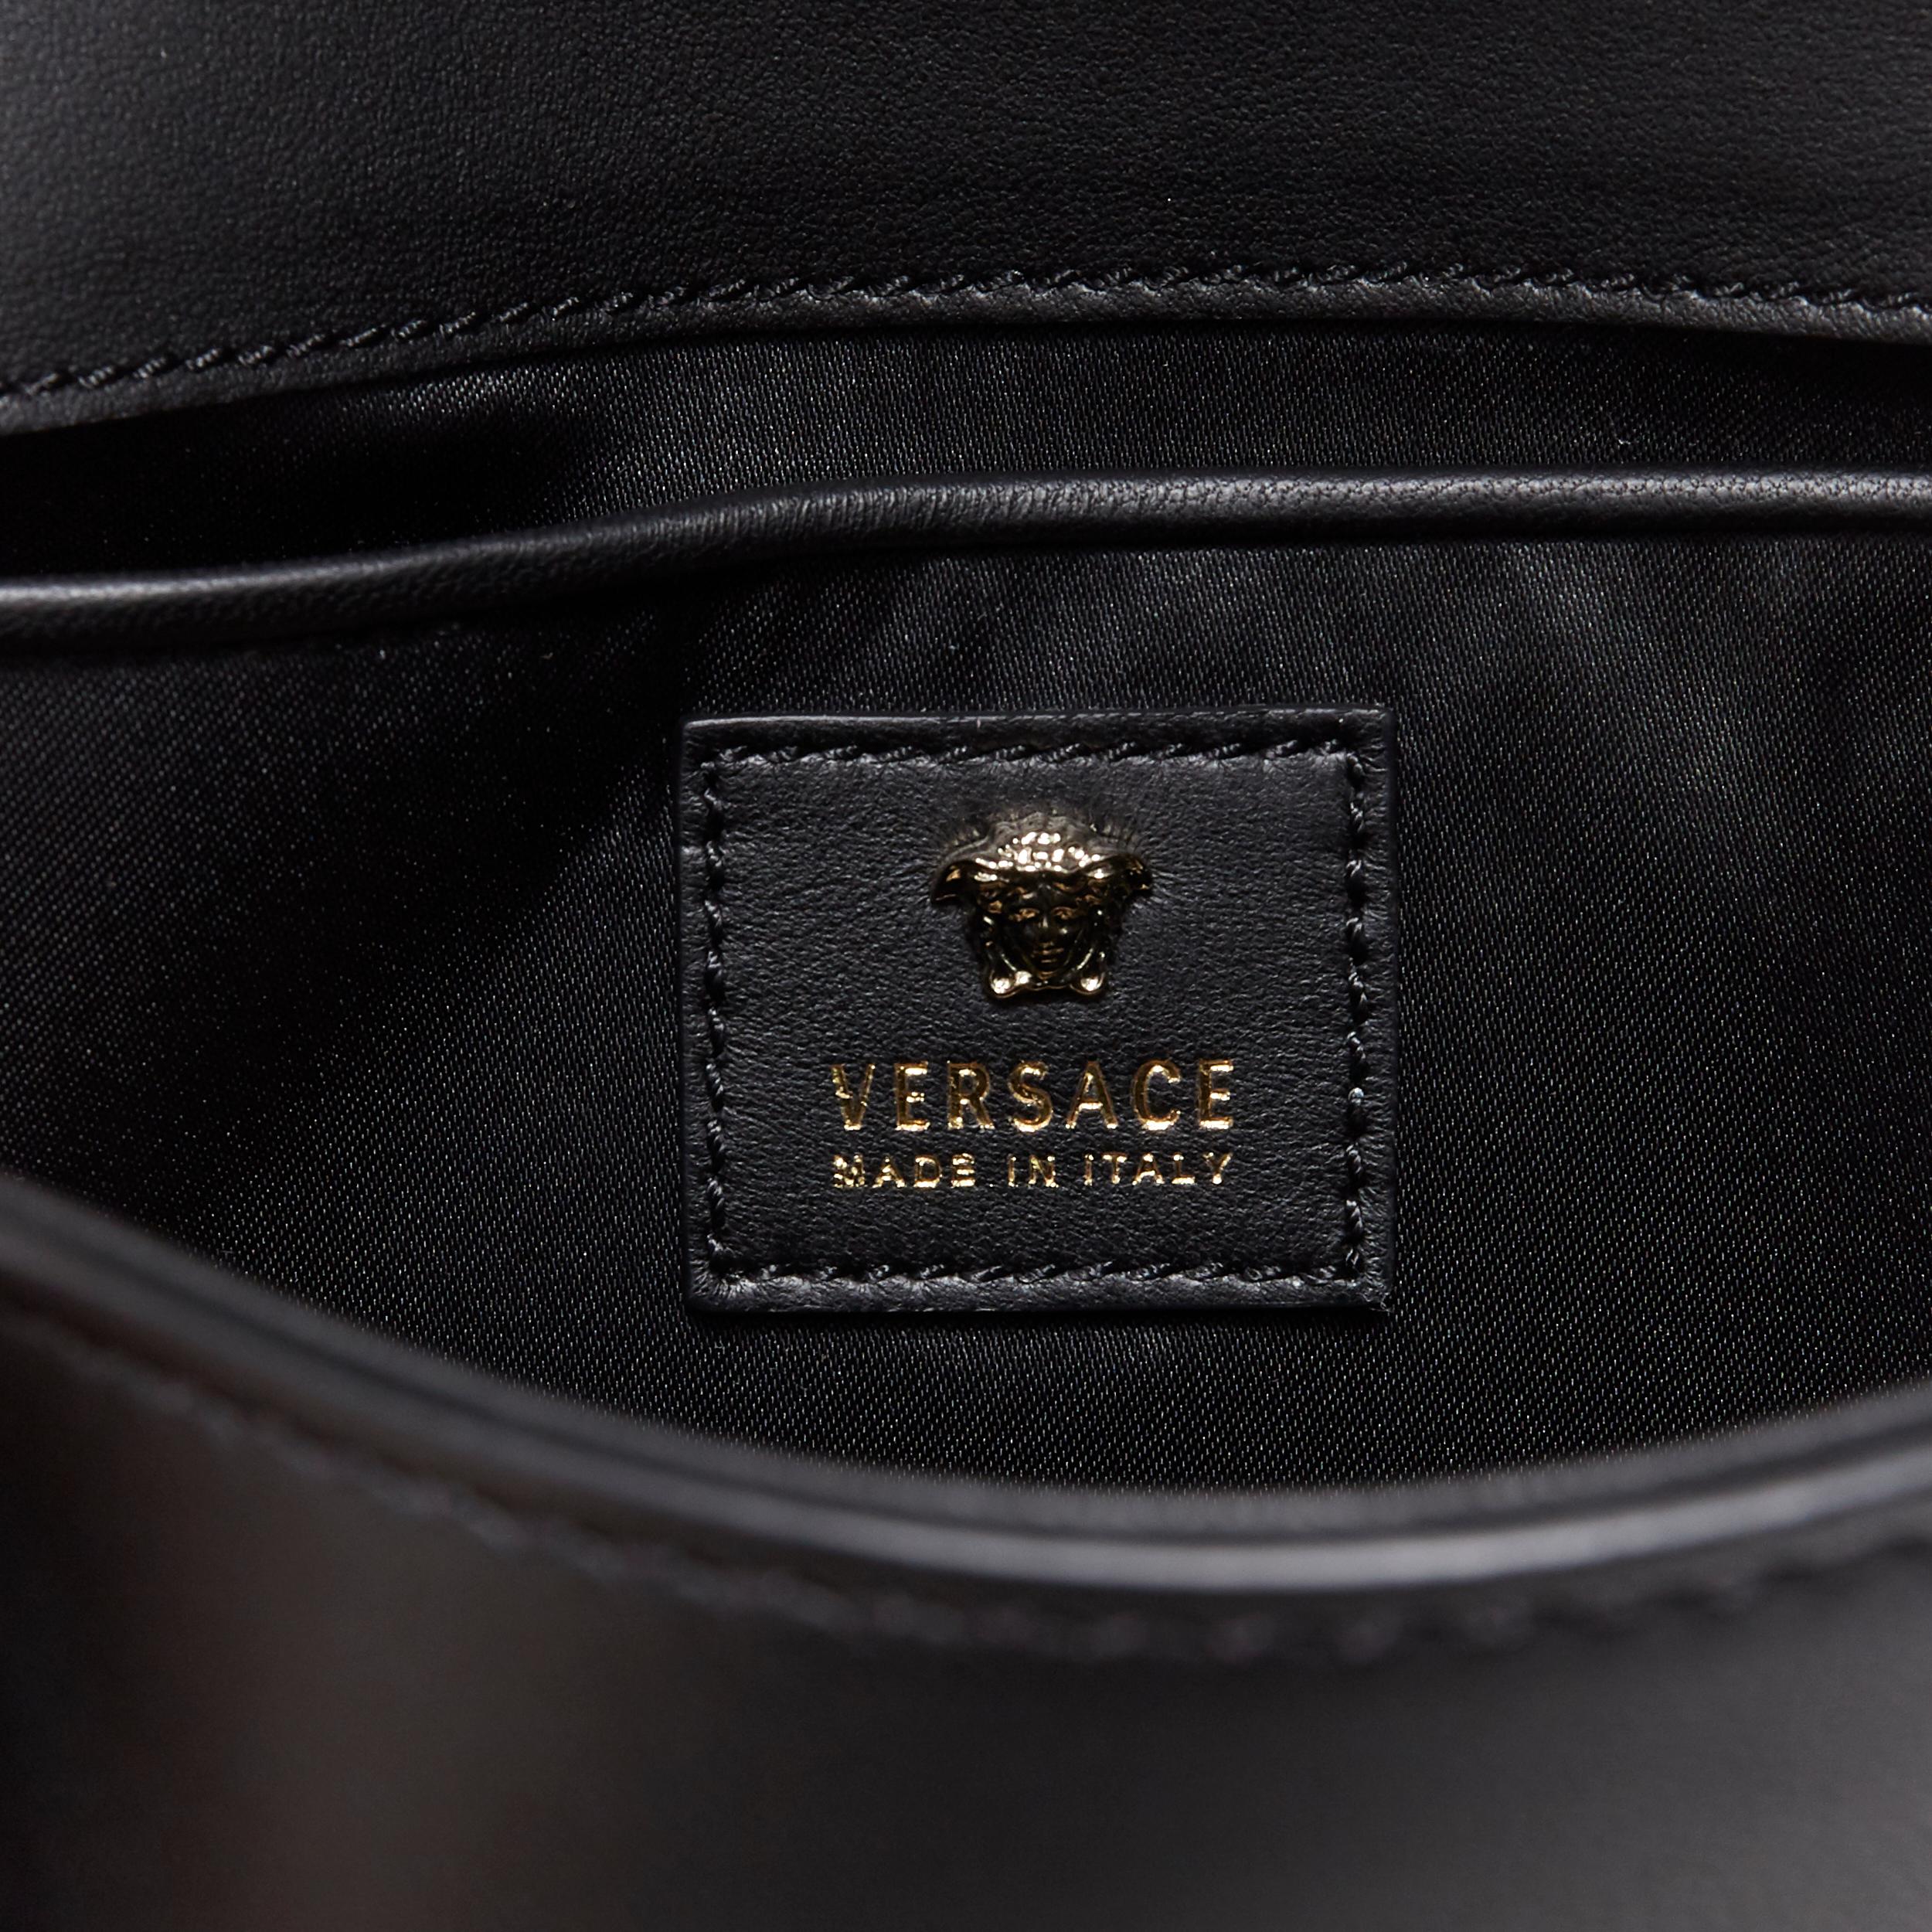 new VERSACE Palazzo Medusa black calf leather flap shoulder chain clutch bag 5